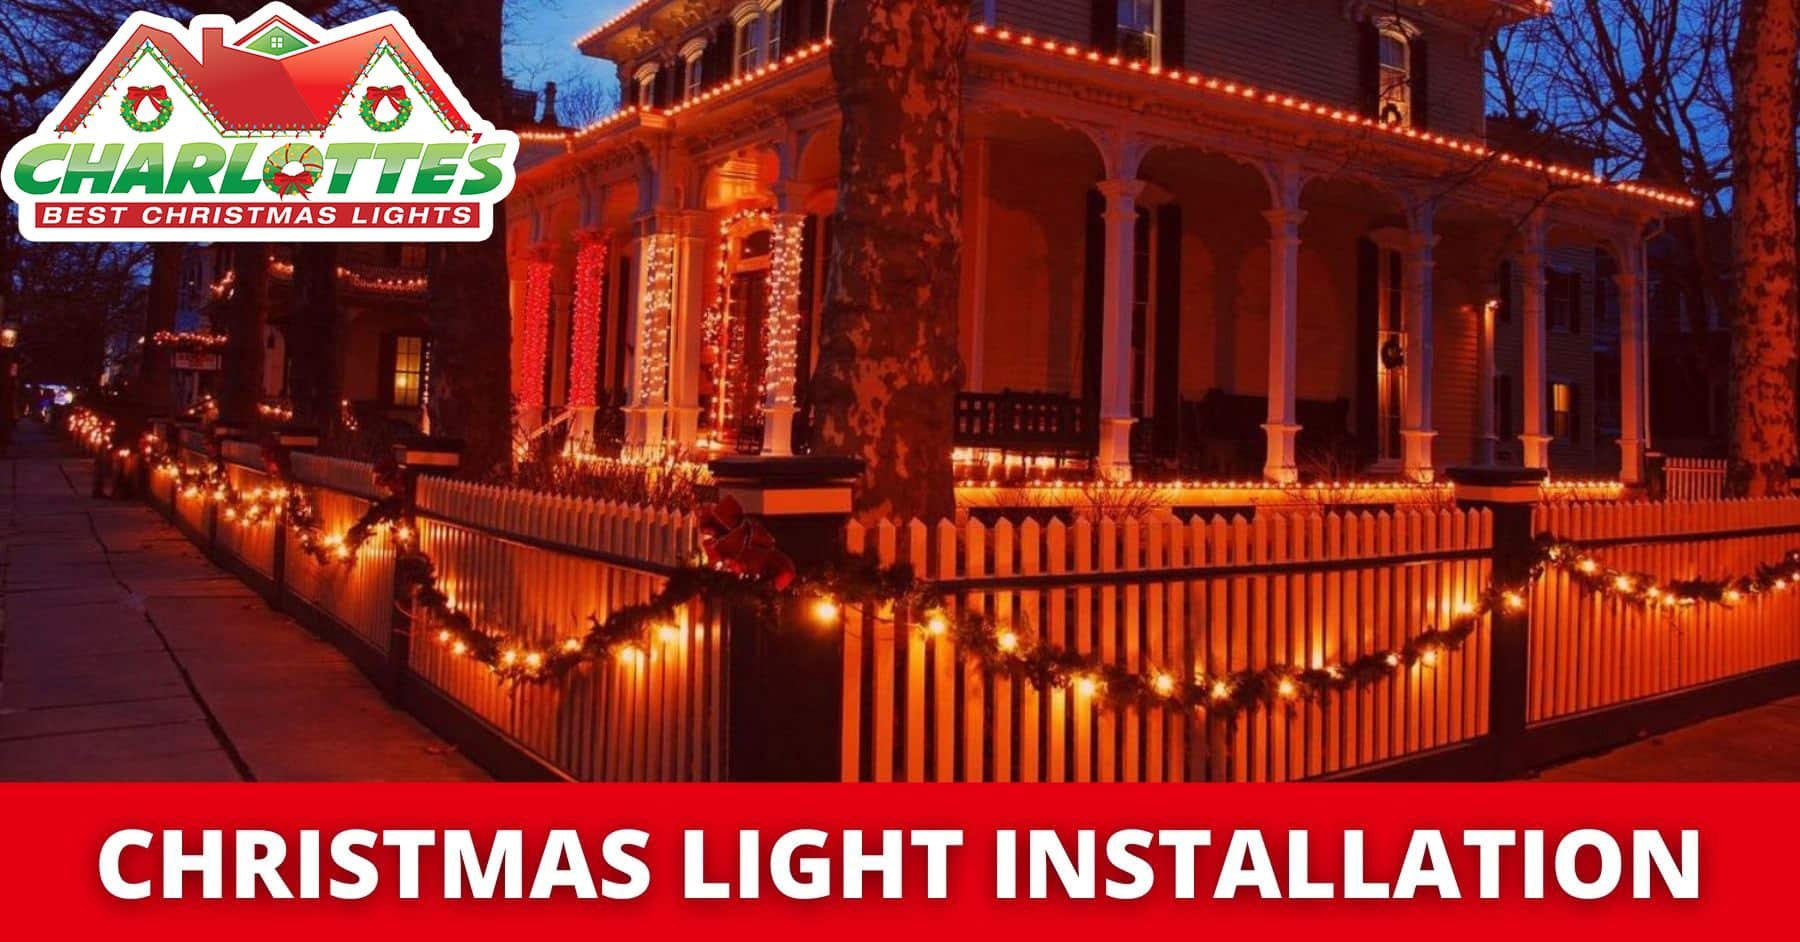 Charlotte's Best Christmas Lights cover image